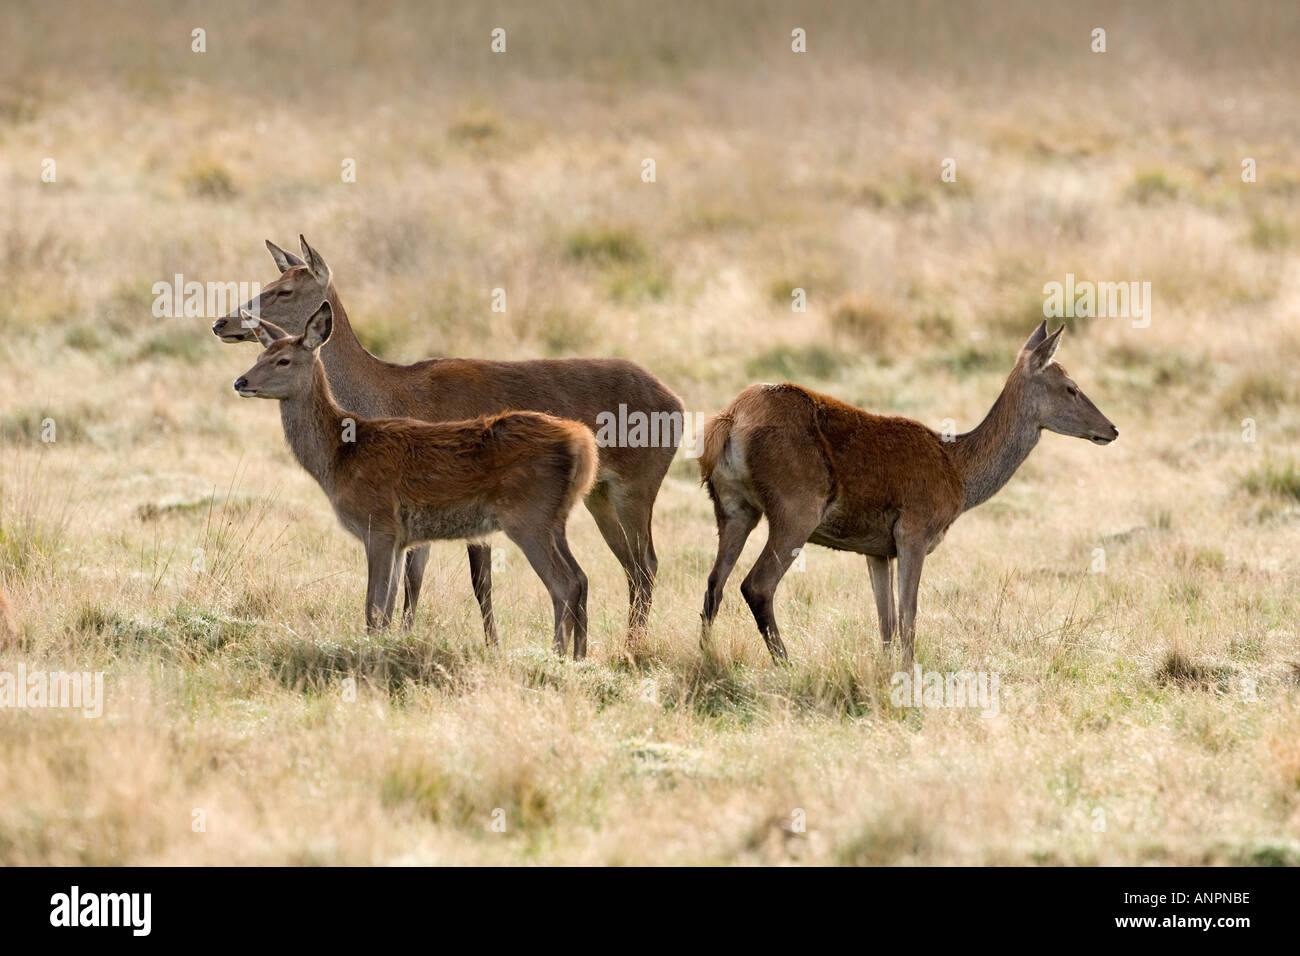 Red Deer Cervus elaphus Hinds standing in grass looking alert richmond park london Stock Photo